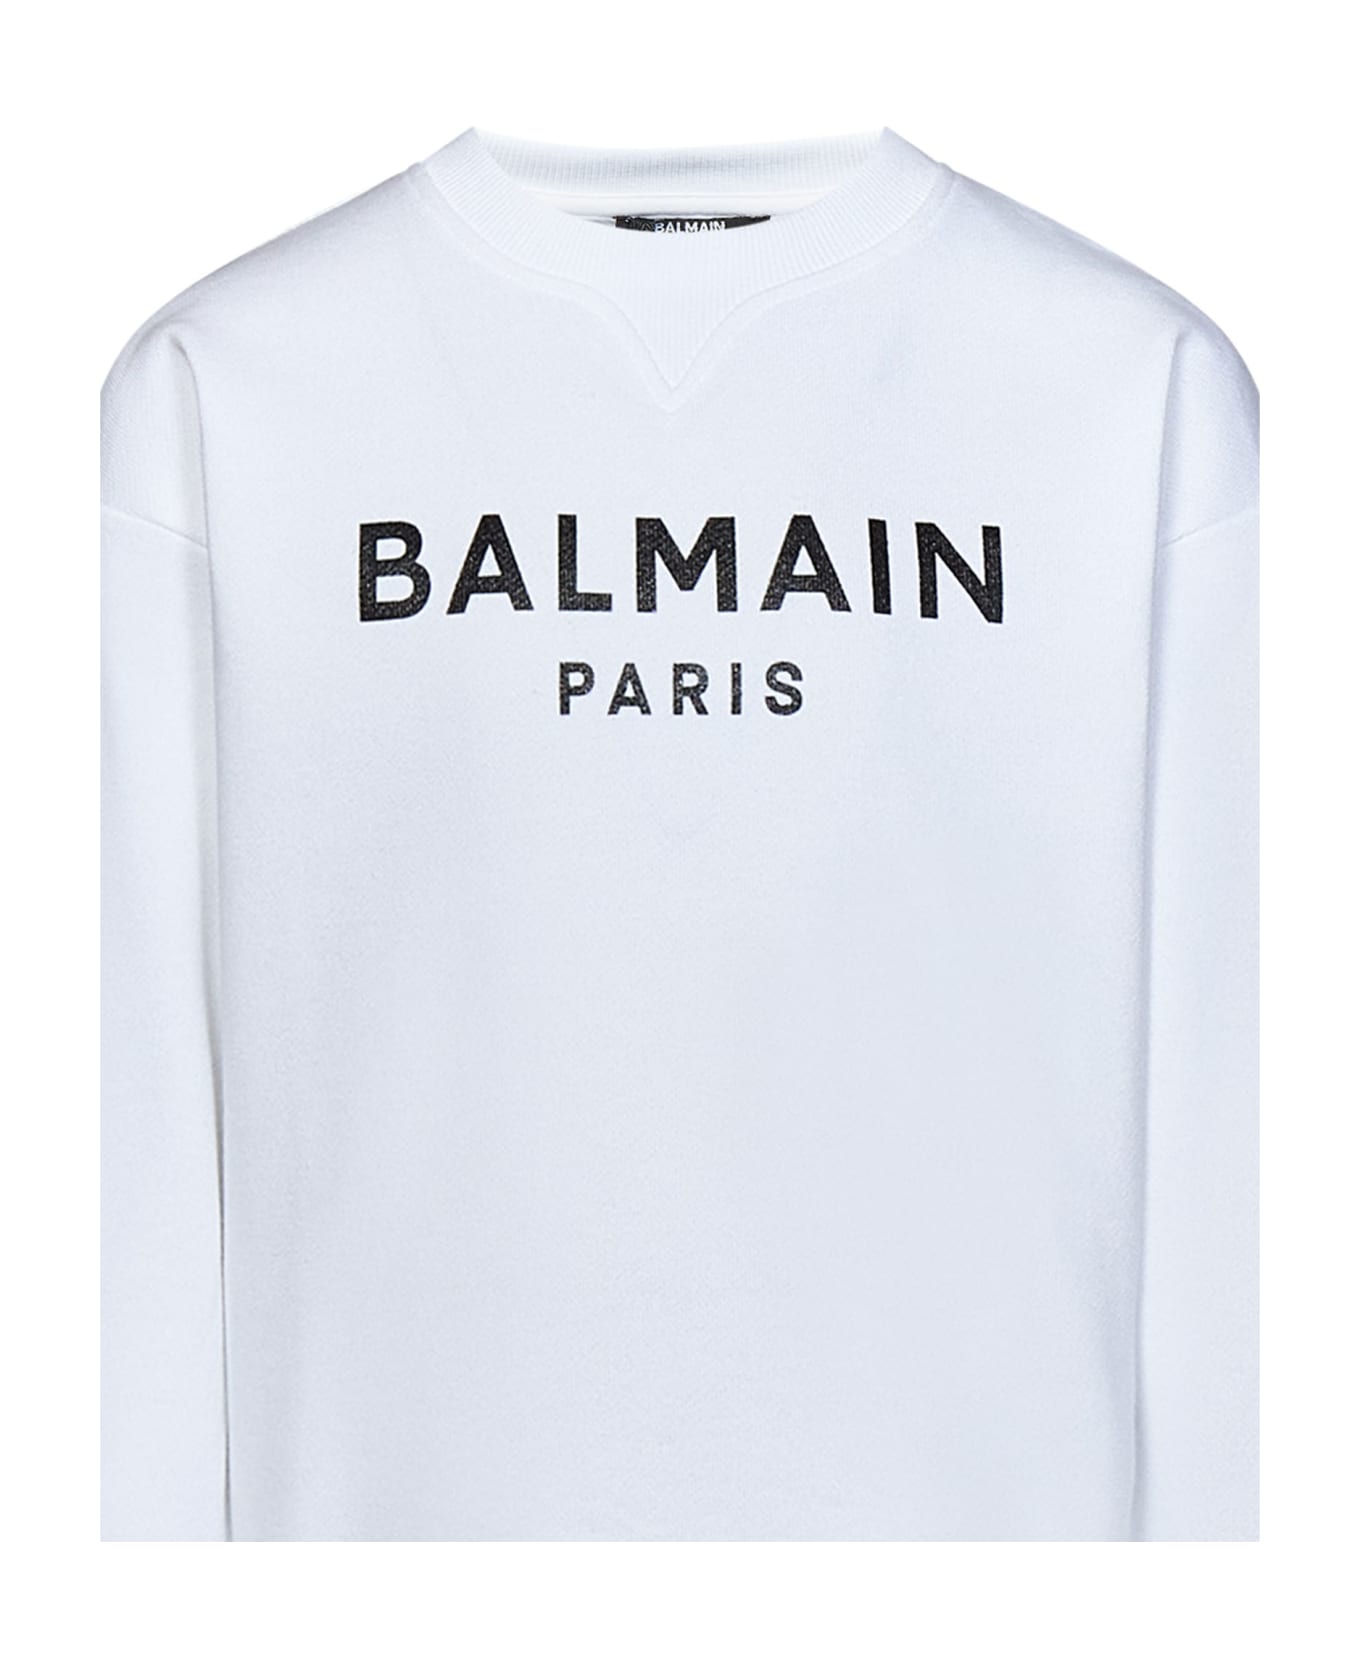 Balmain Paris Kids Sweatshirt - White